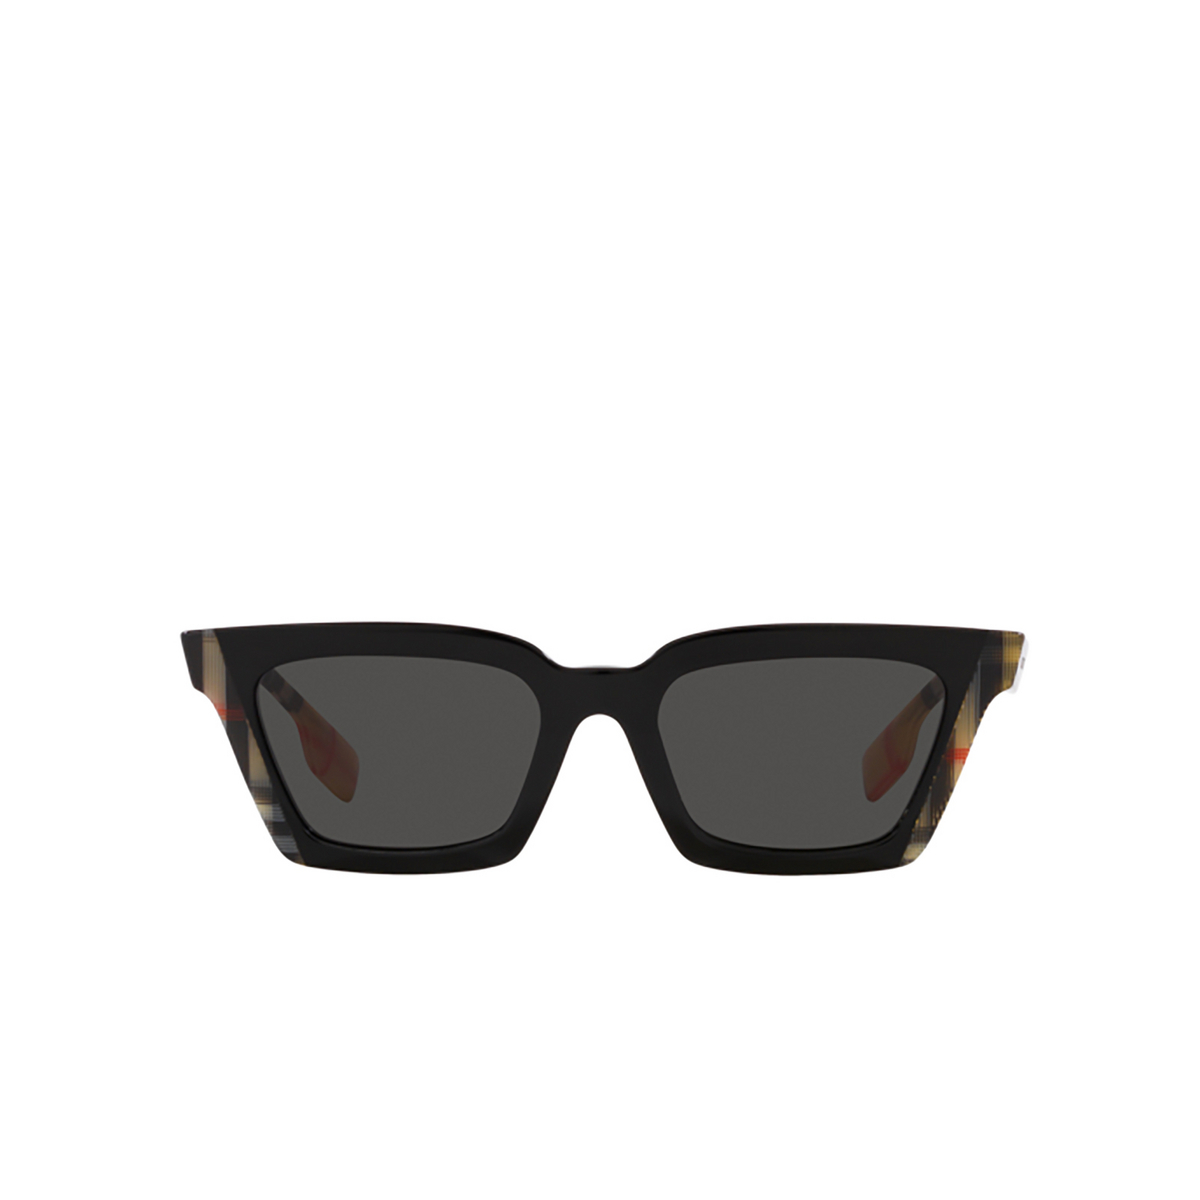 Burberry BRIAR Sunglasses 405587 Black / Vintage Check - front view